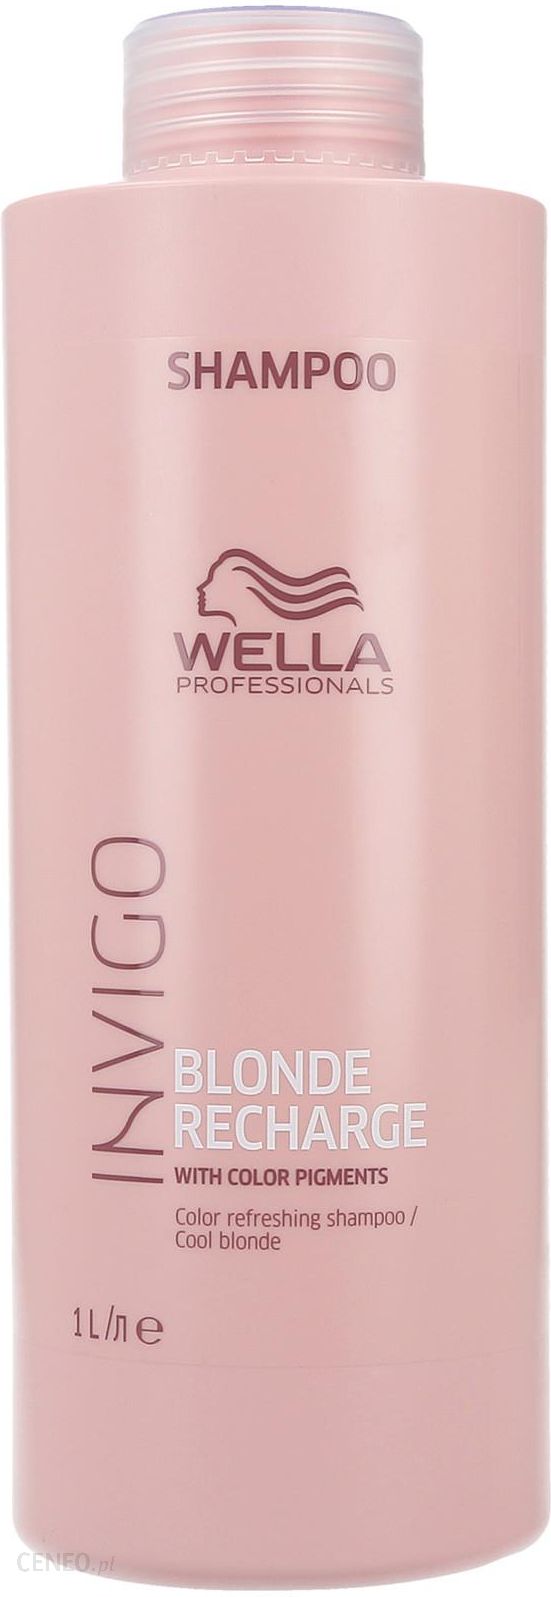 szampon blonde recharge wella